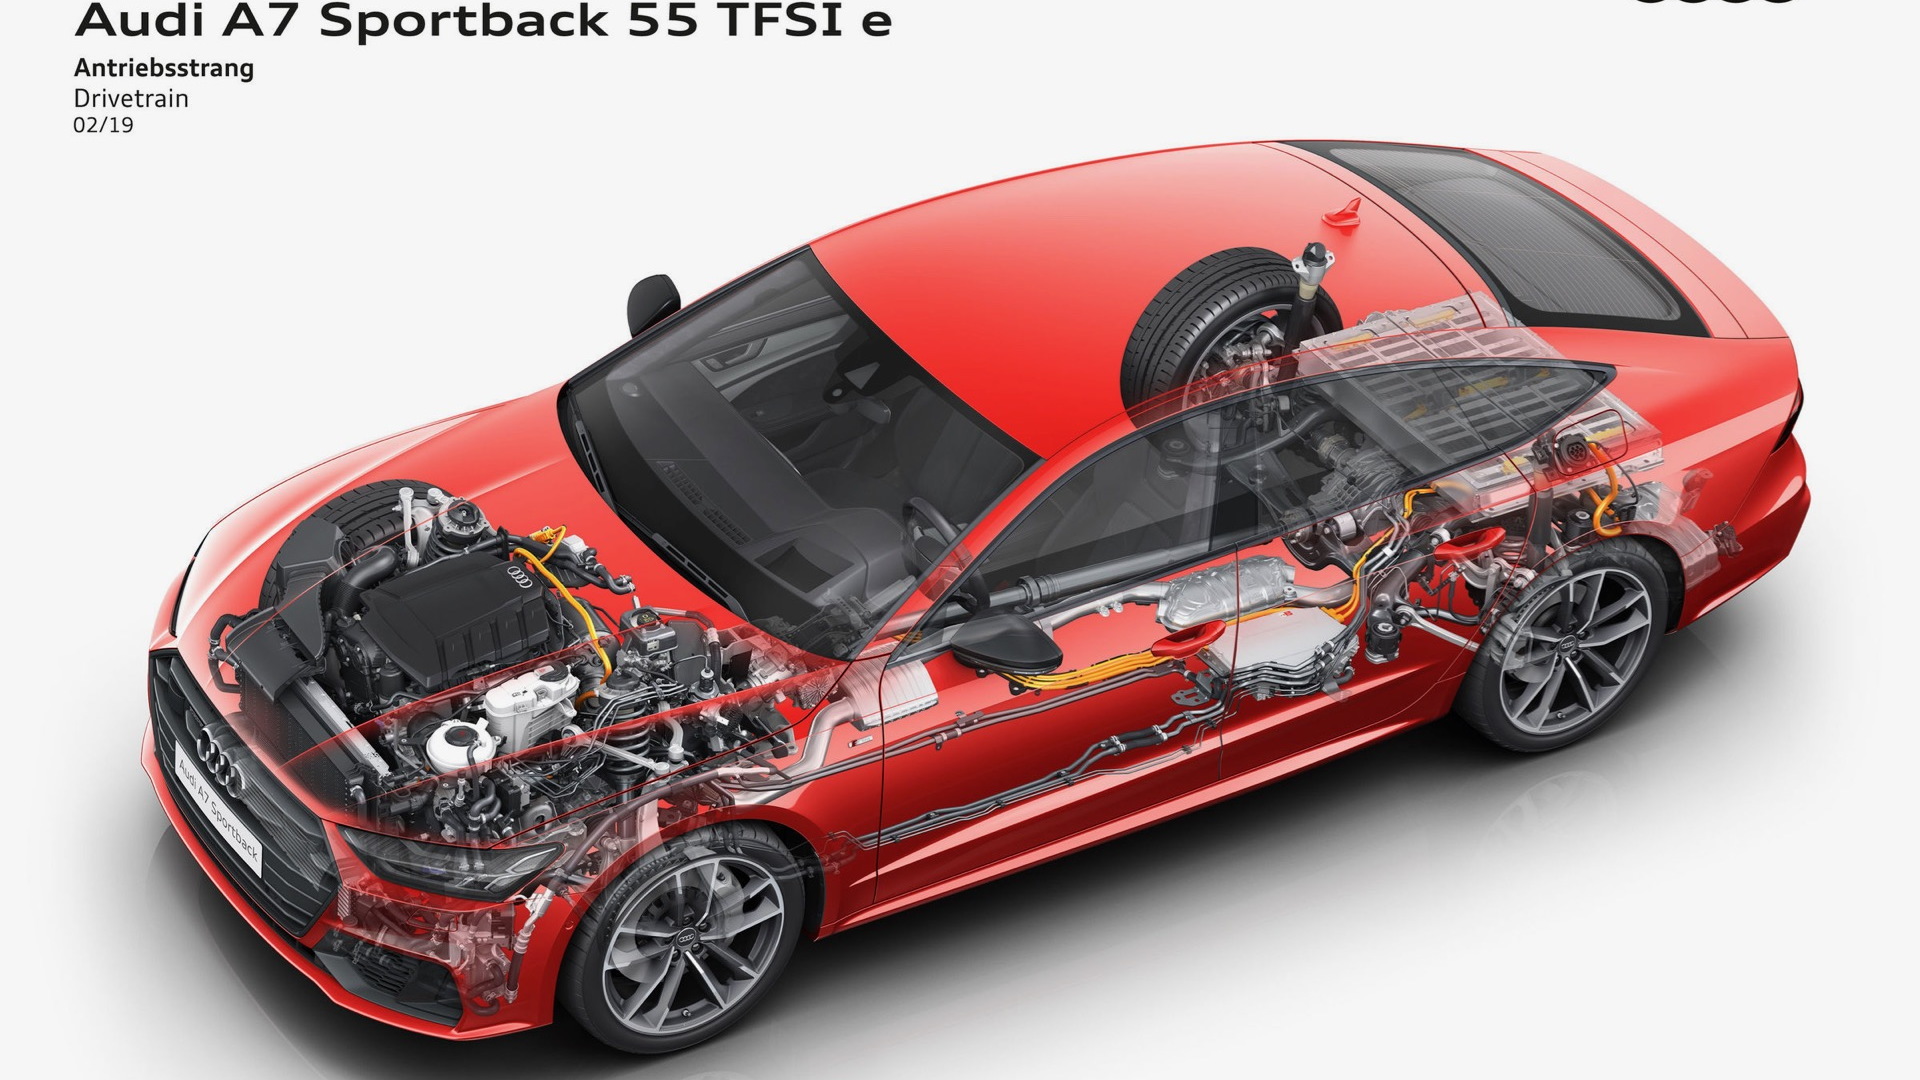 2021 Audi A7 Sportback 55 TFSI e plug-in hybrid